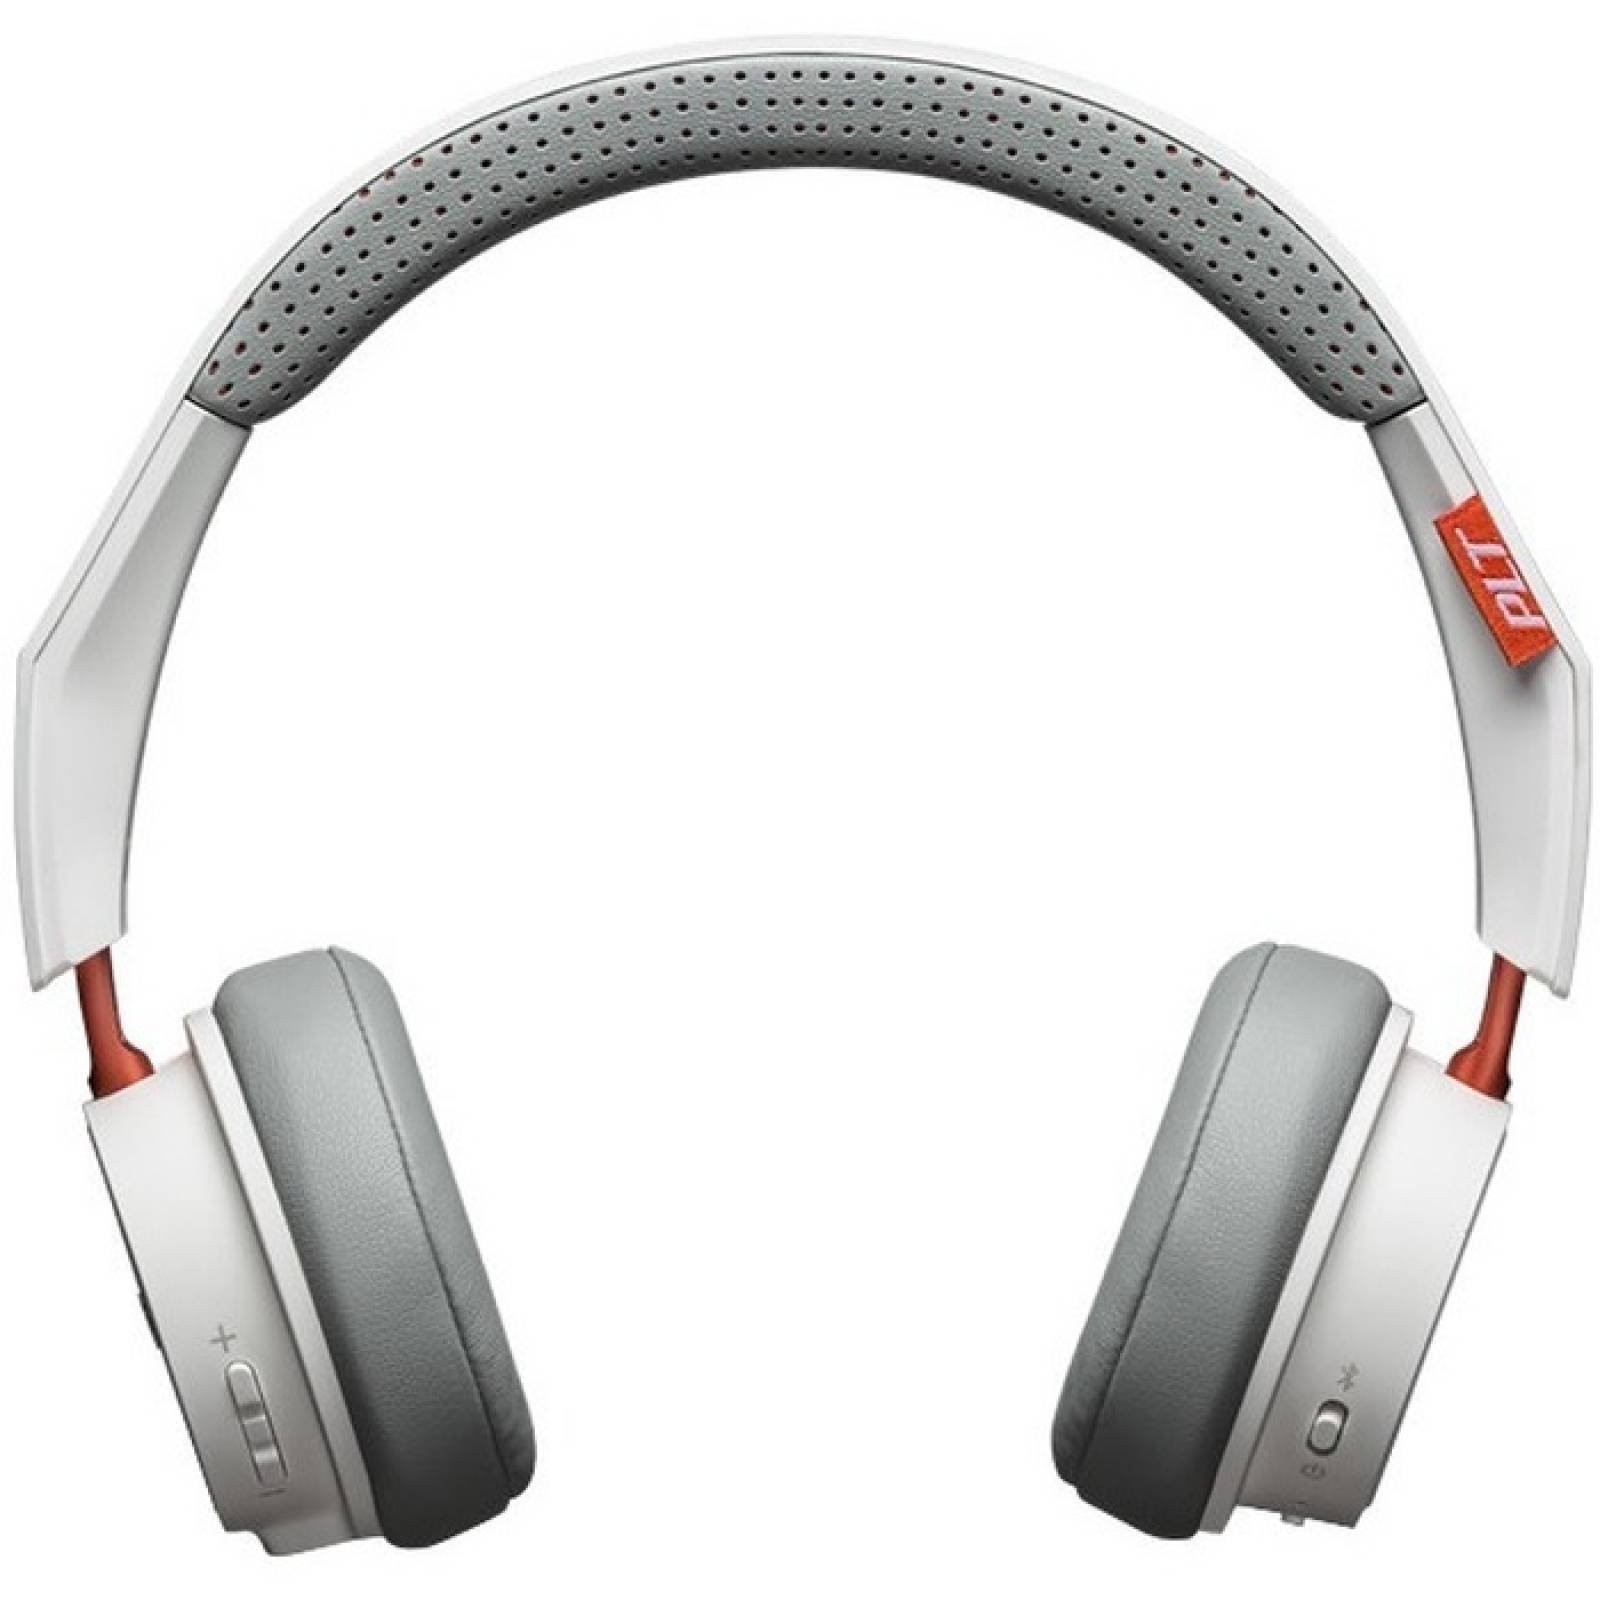 Plantronics Backbeat 500 Series Wireless Headphones